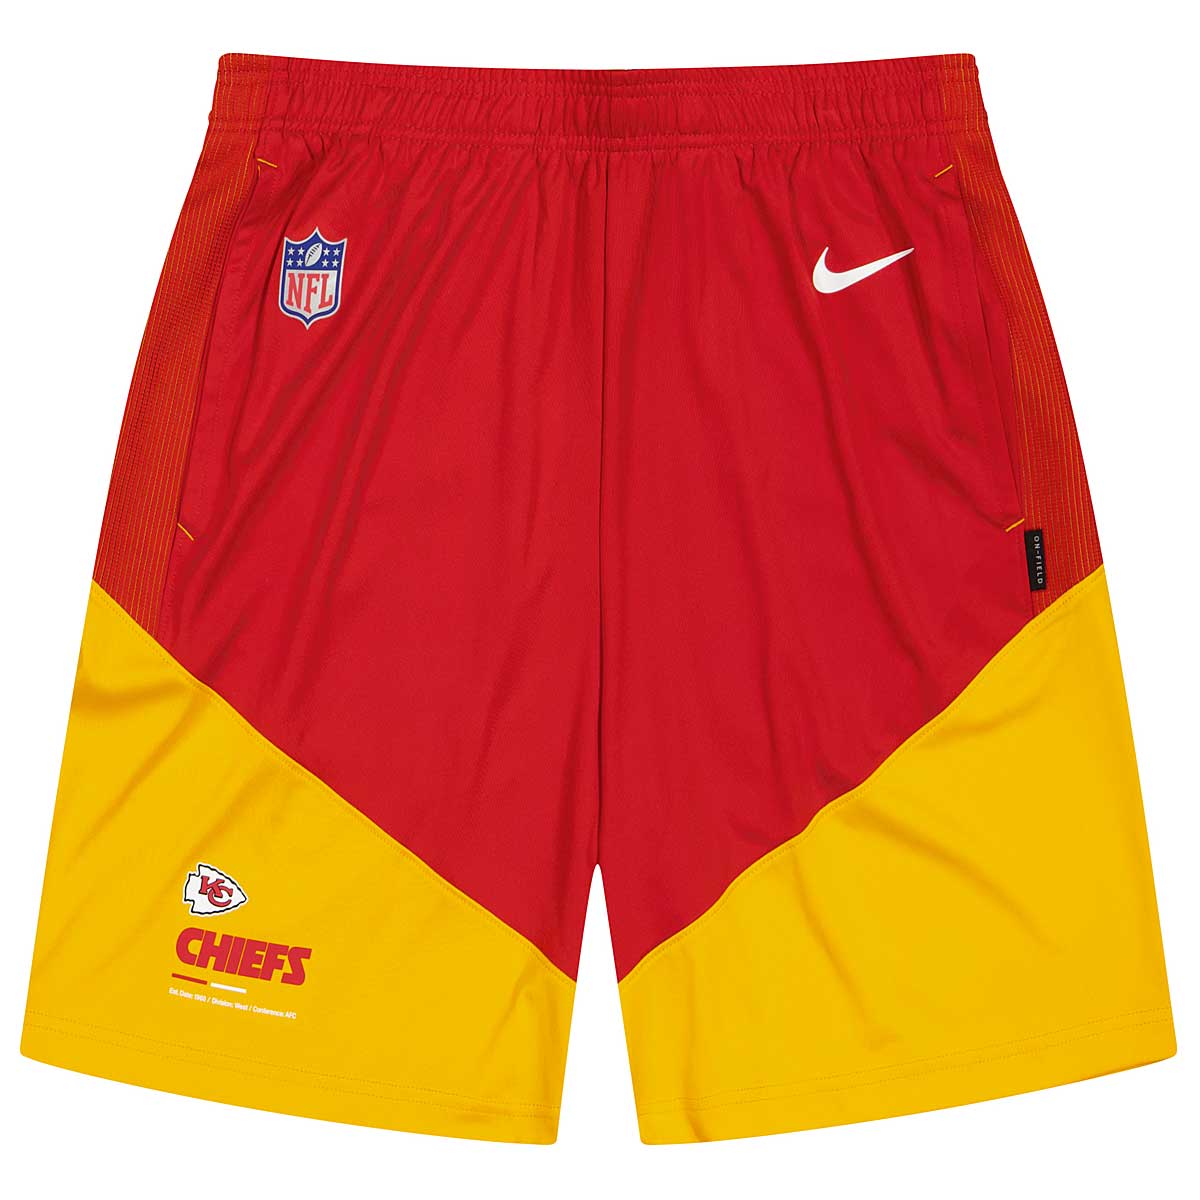 Nike Nfl Kansas City Chiefs Dri-Fit Knit Shorts, University Red-University Gold-University Red Kansa